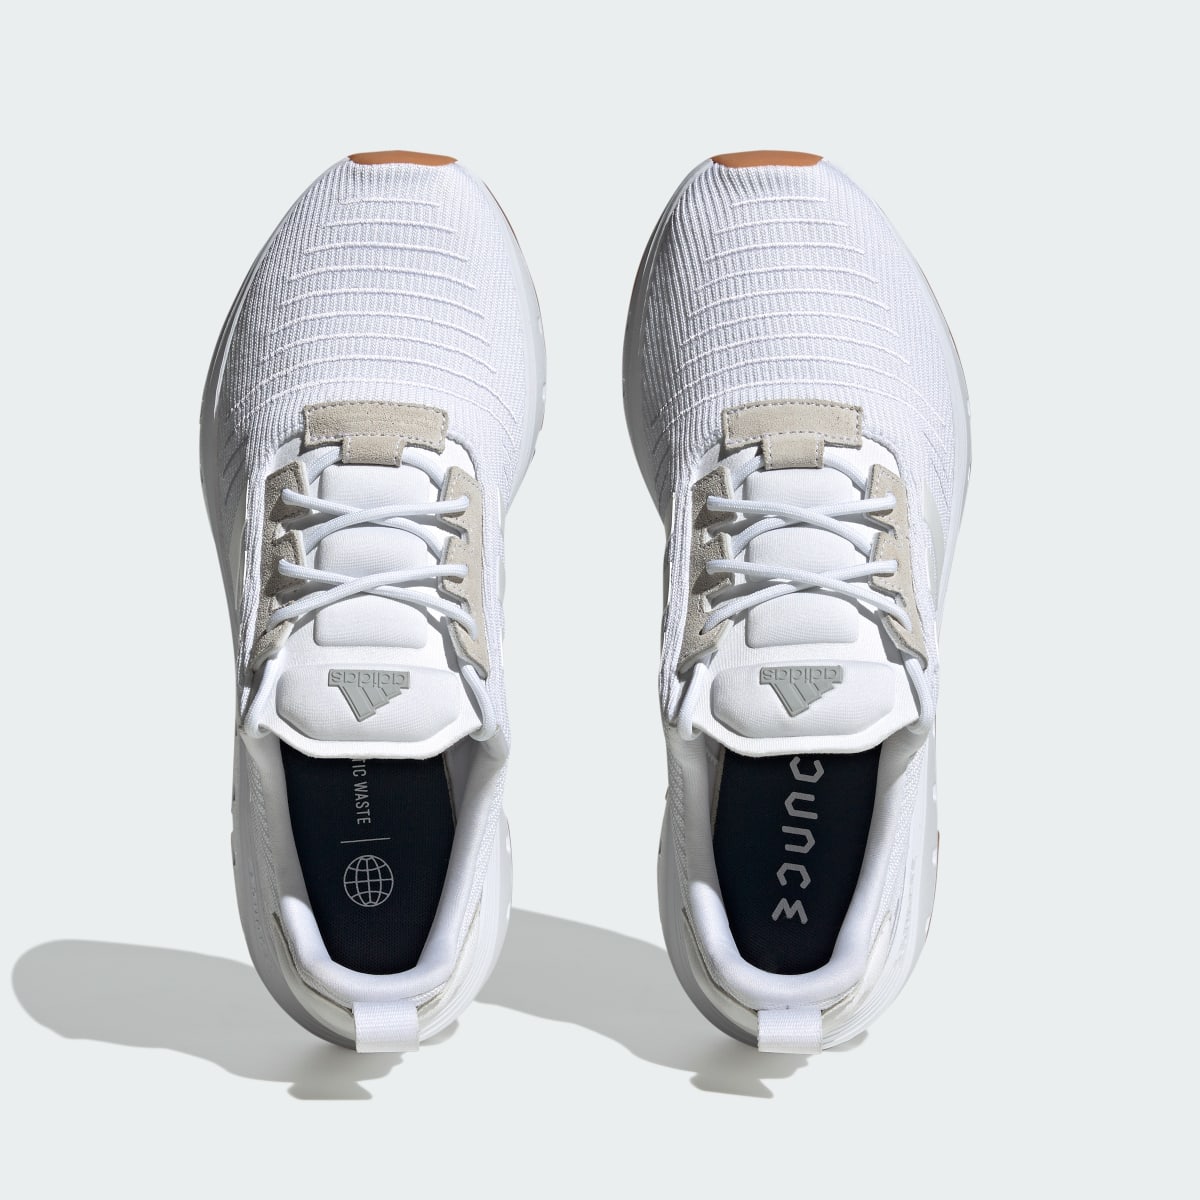 Adidas Swift Run Shoes. 6